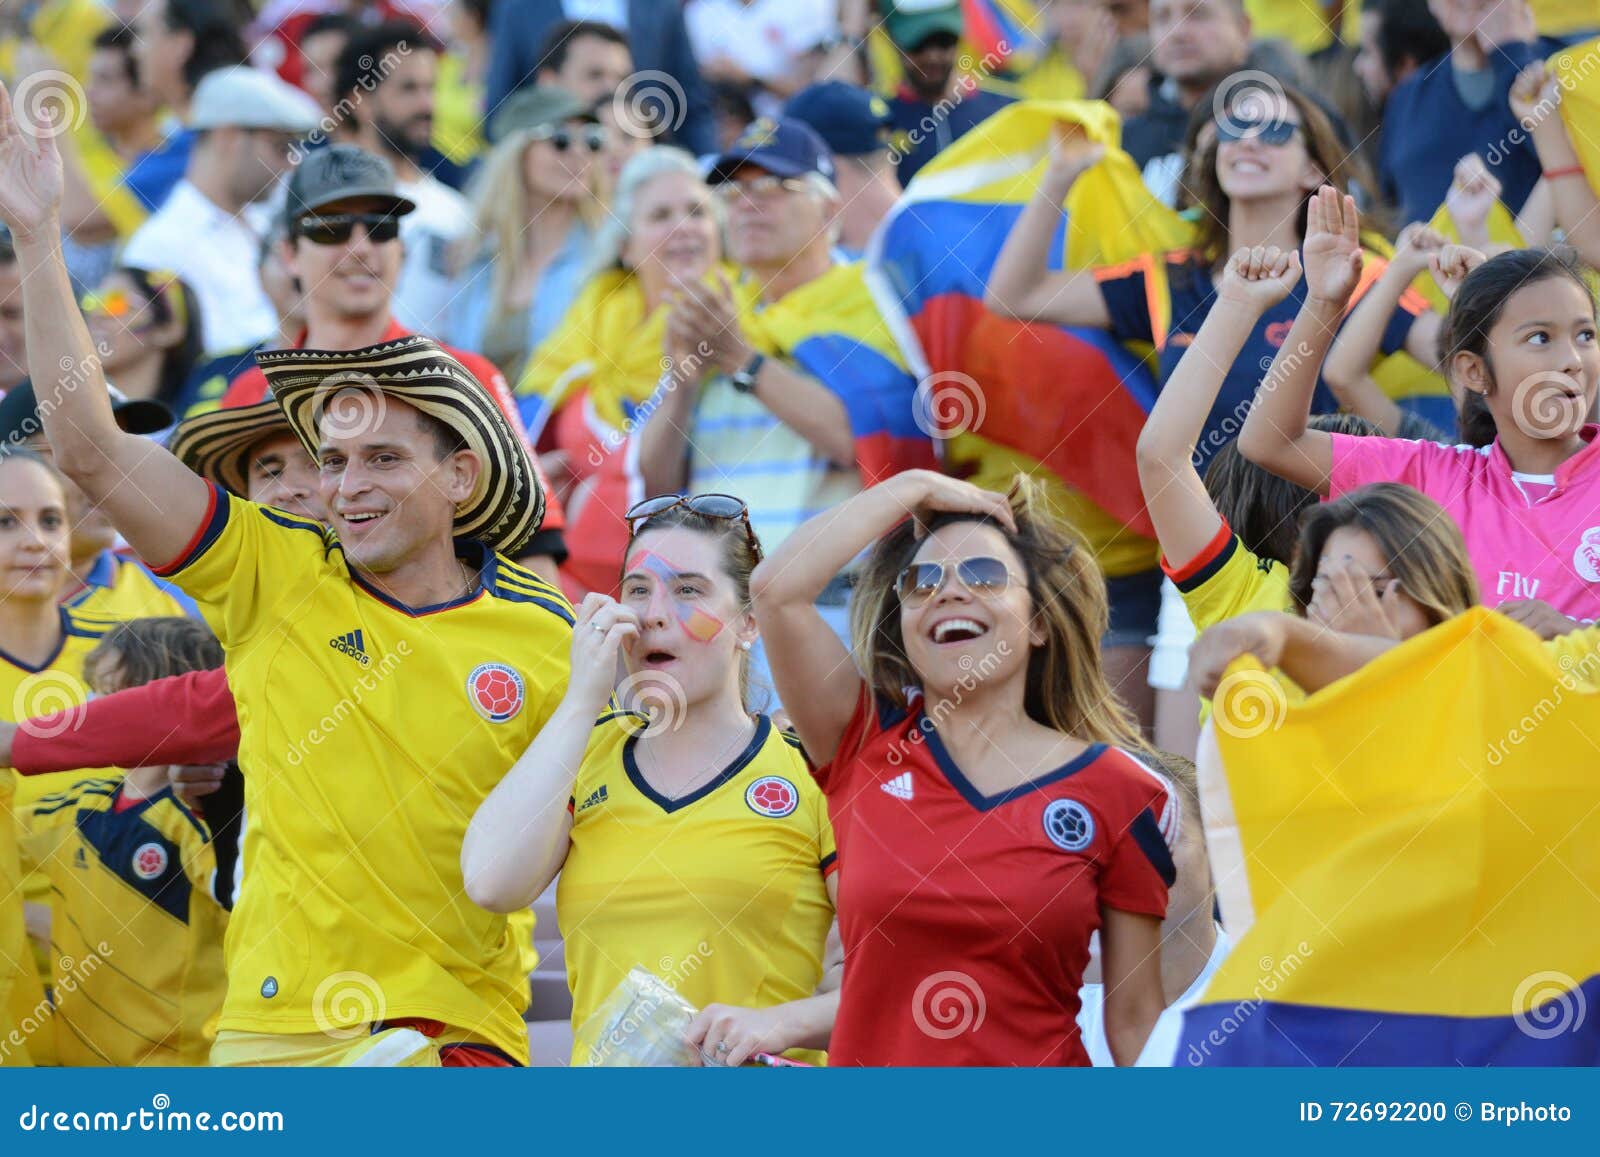 Colombia vs. Paraguay - Match